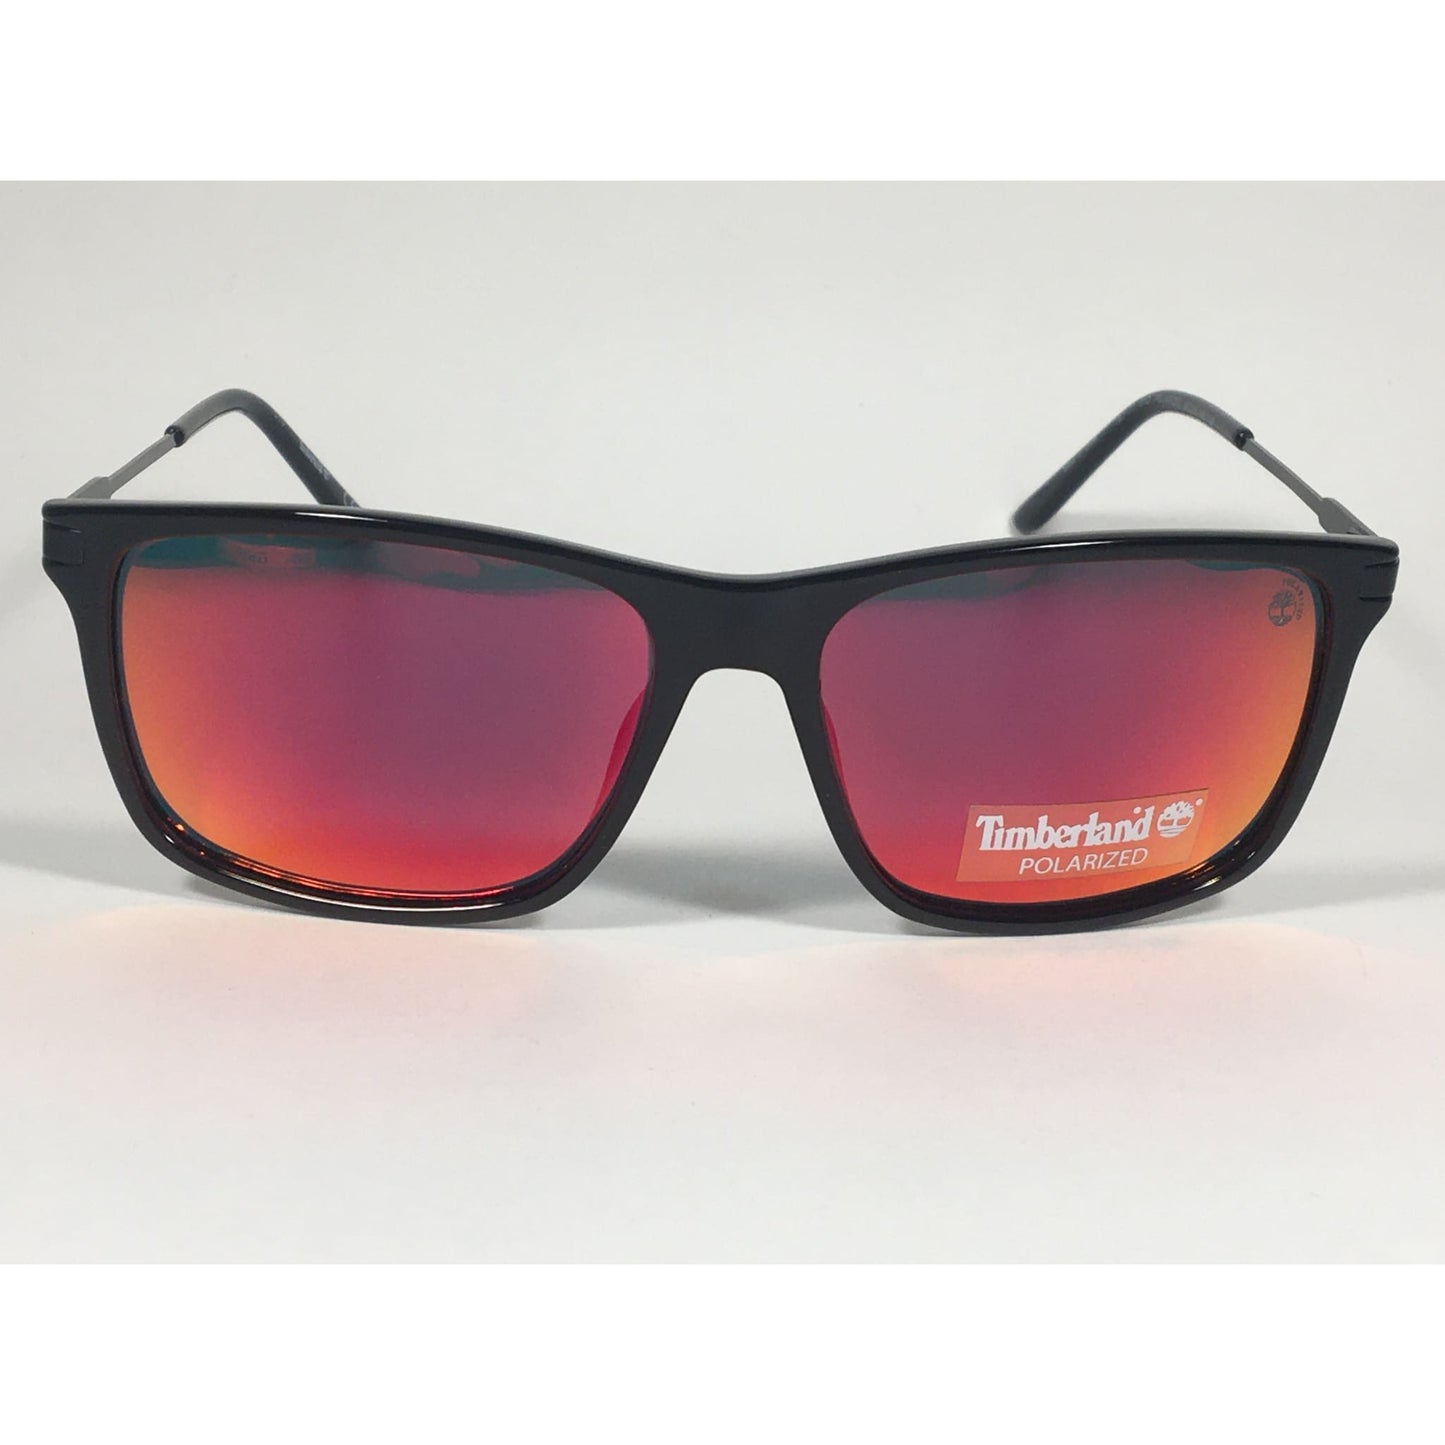 Timberland Polarized Square Sunglasses Black Infrared Red Orange Mirror Lens TB7177 01D - Sunglasses